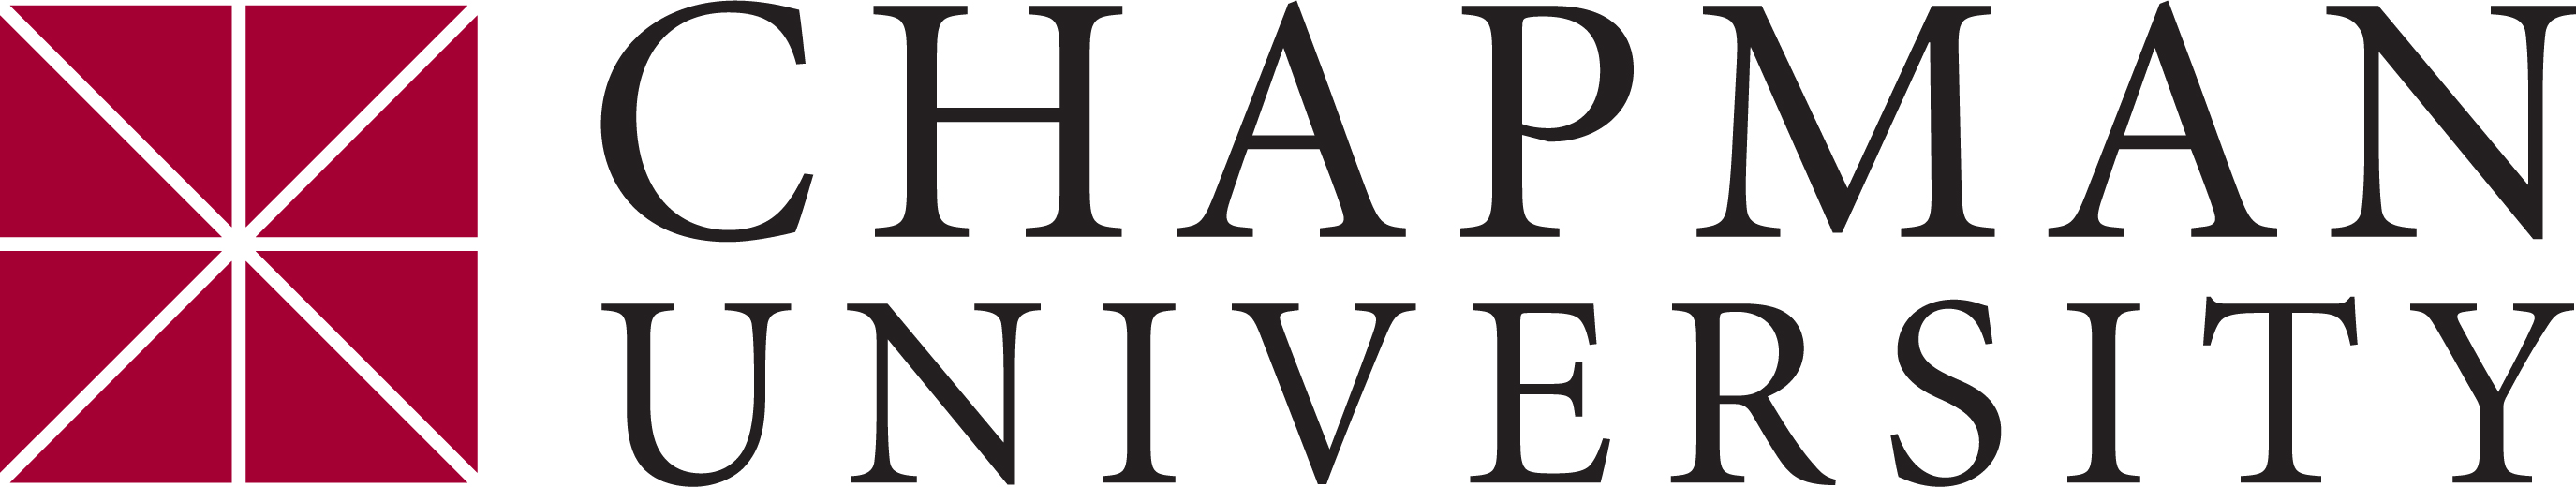 Chapman University logo